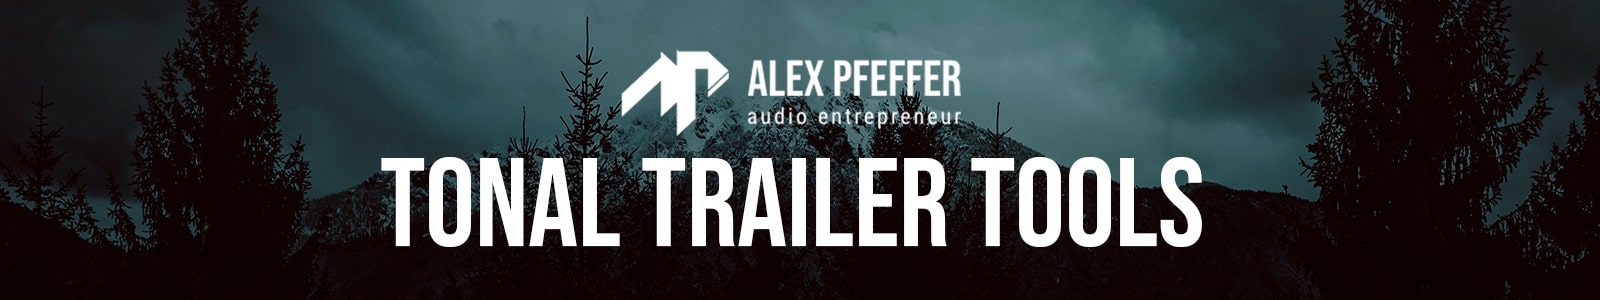 Alex Pfeffer Tonal Trailer Tools